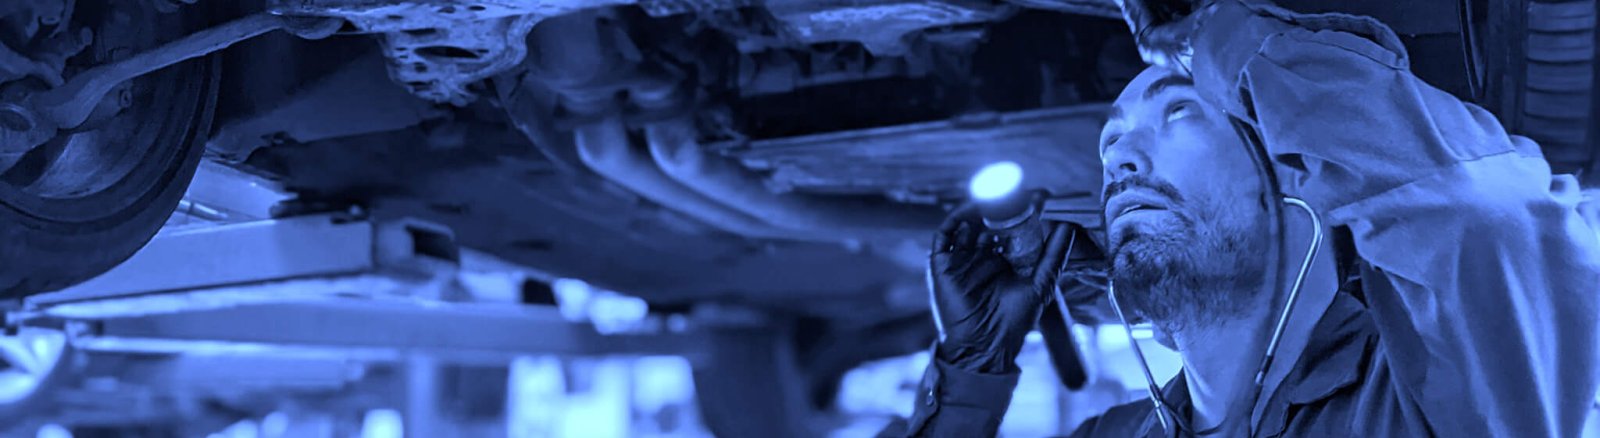 Paddock Imports Volvo mechanic in Denver CO